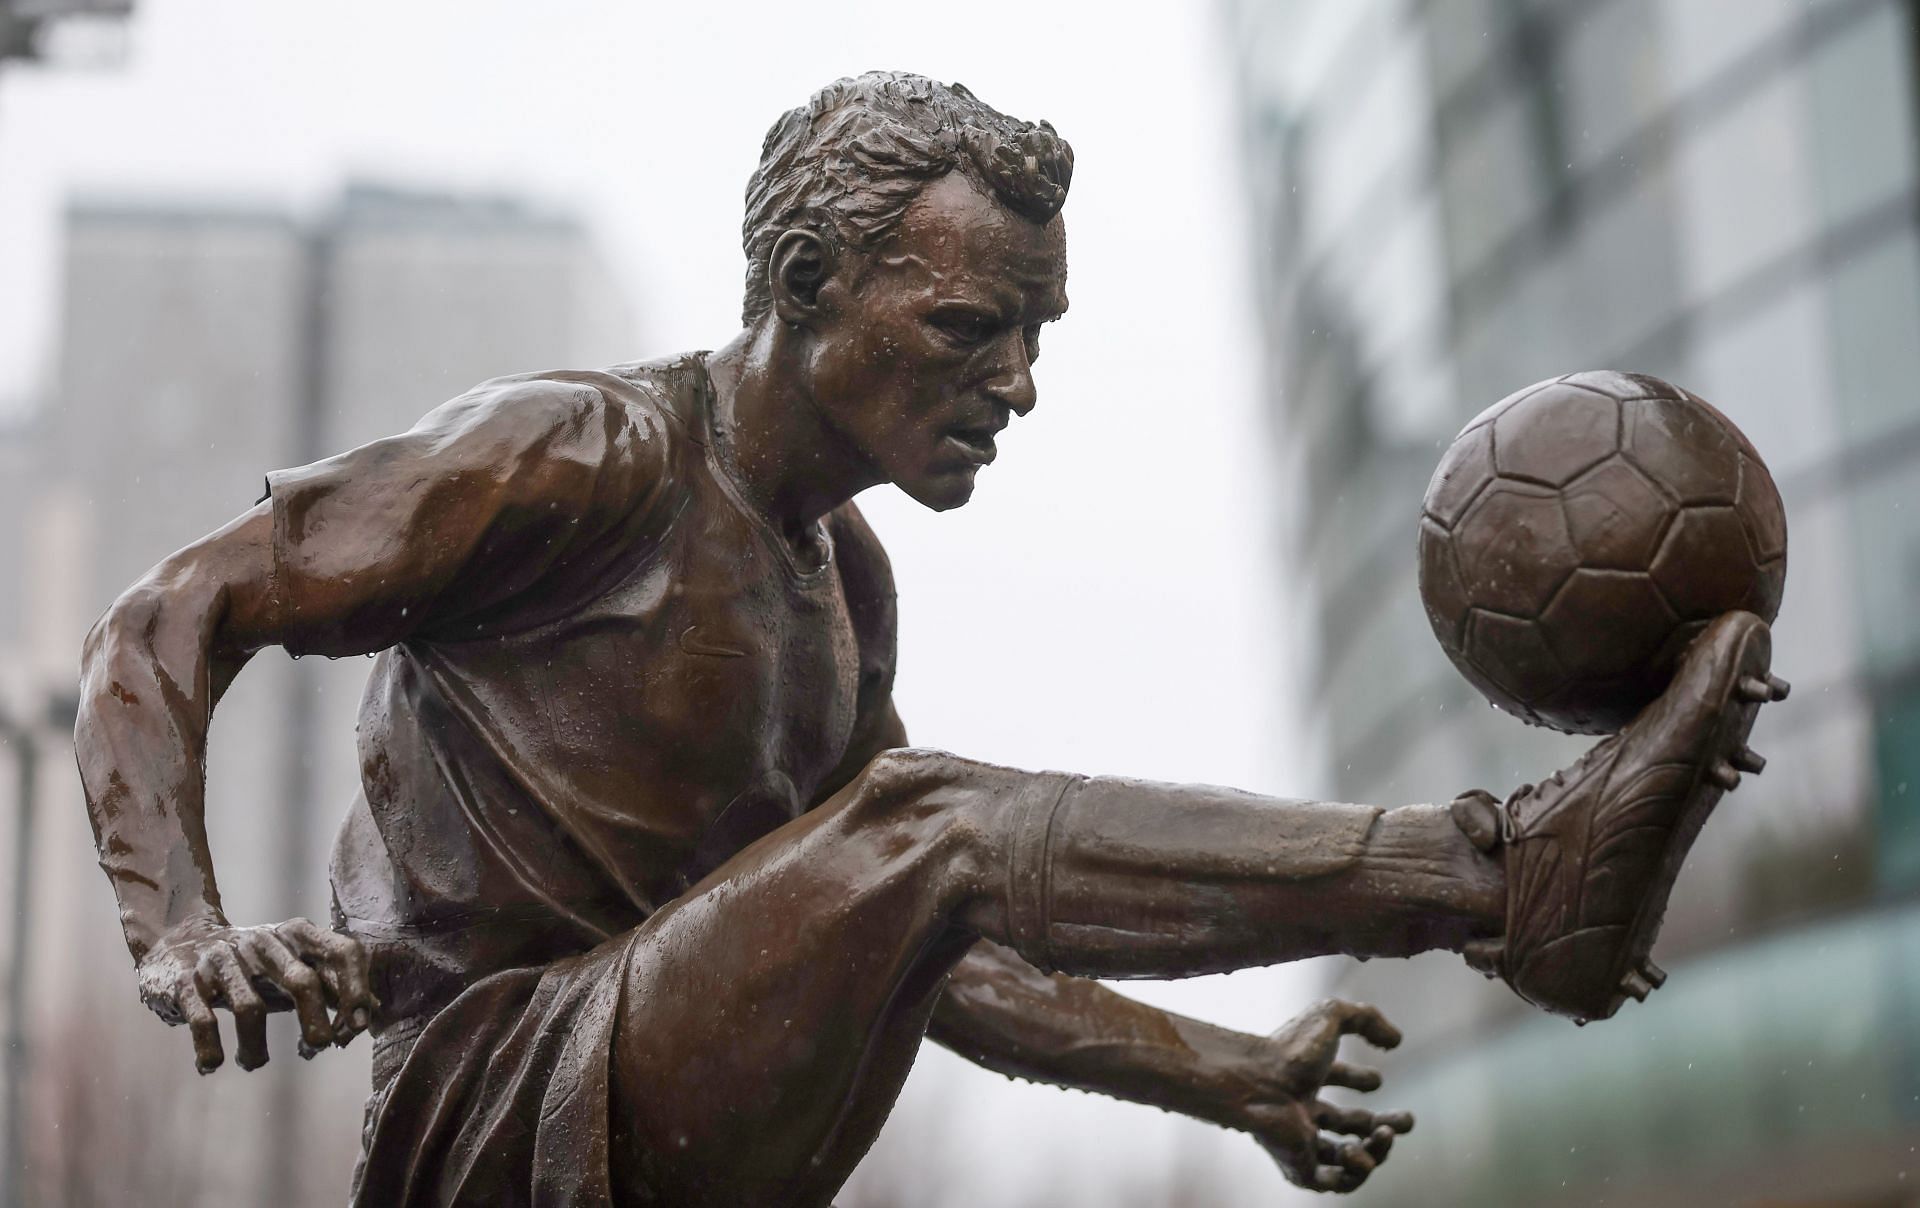 Dennis Bergkamp has been immortalized outside the Emirates Stadium